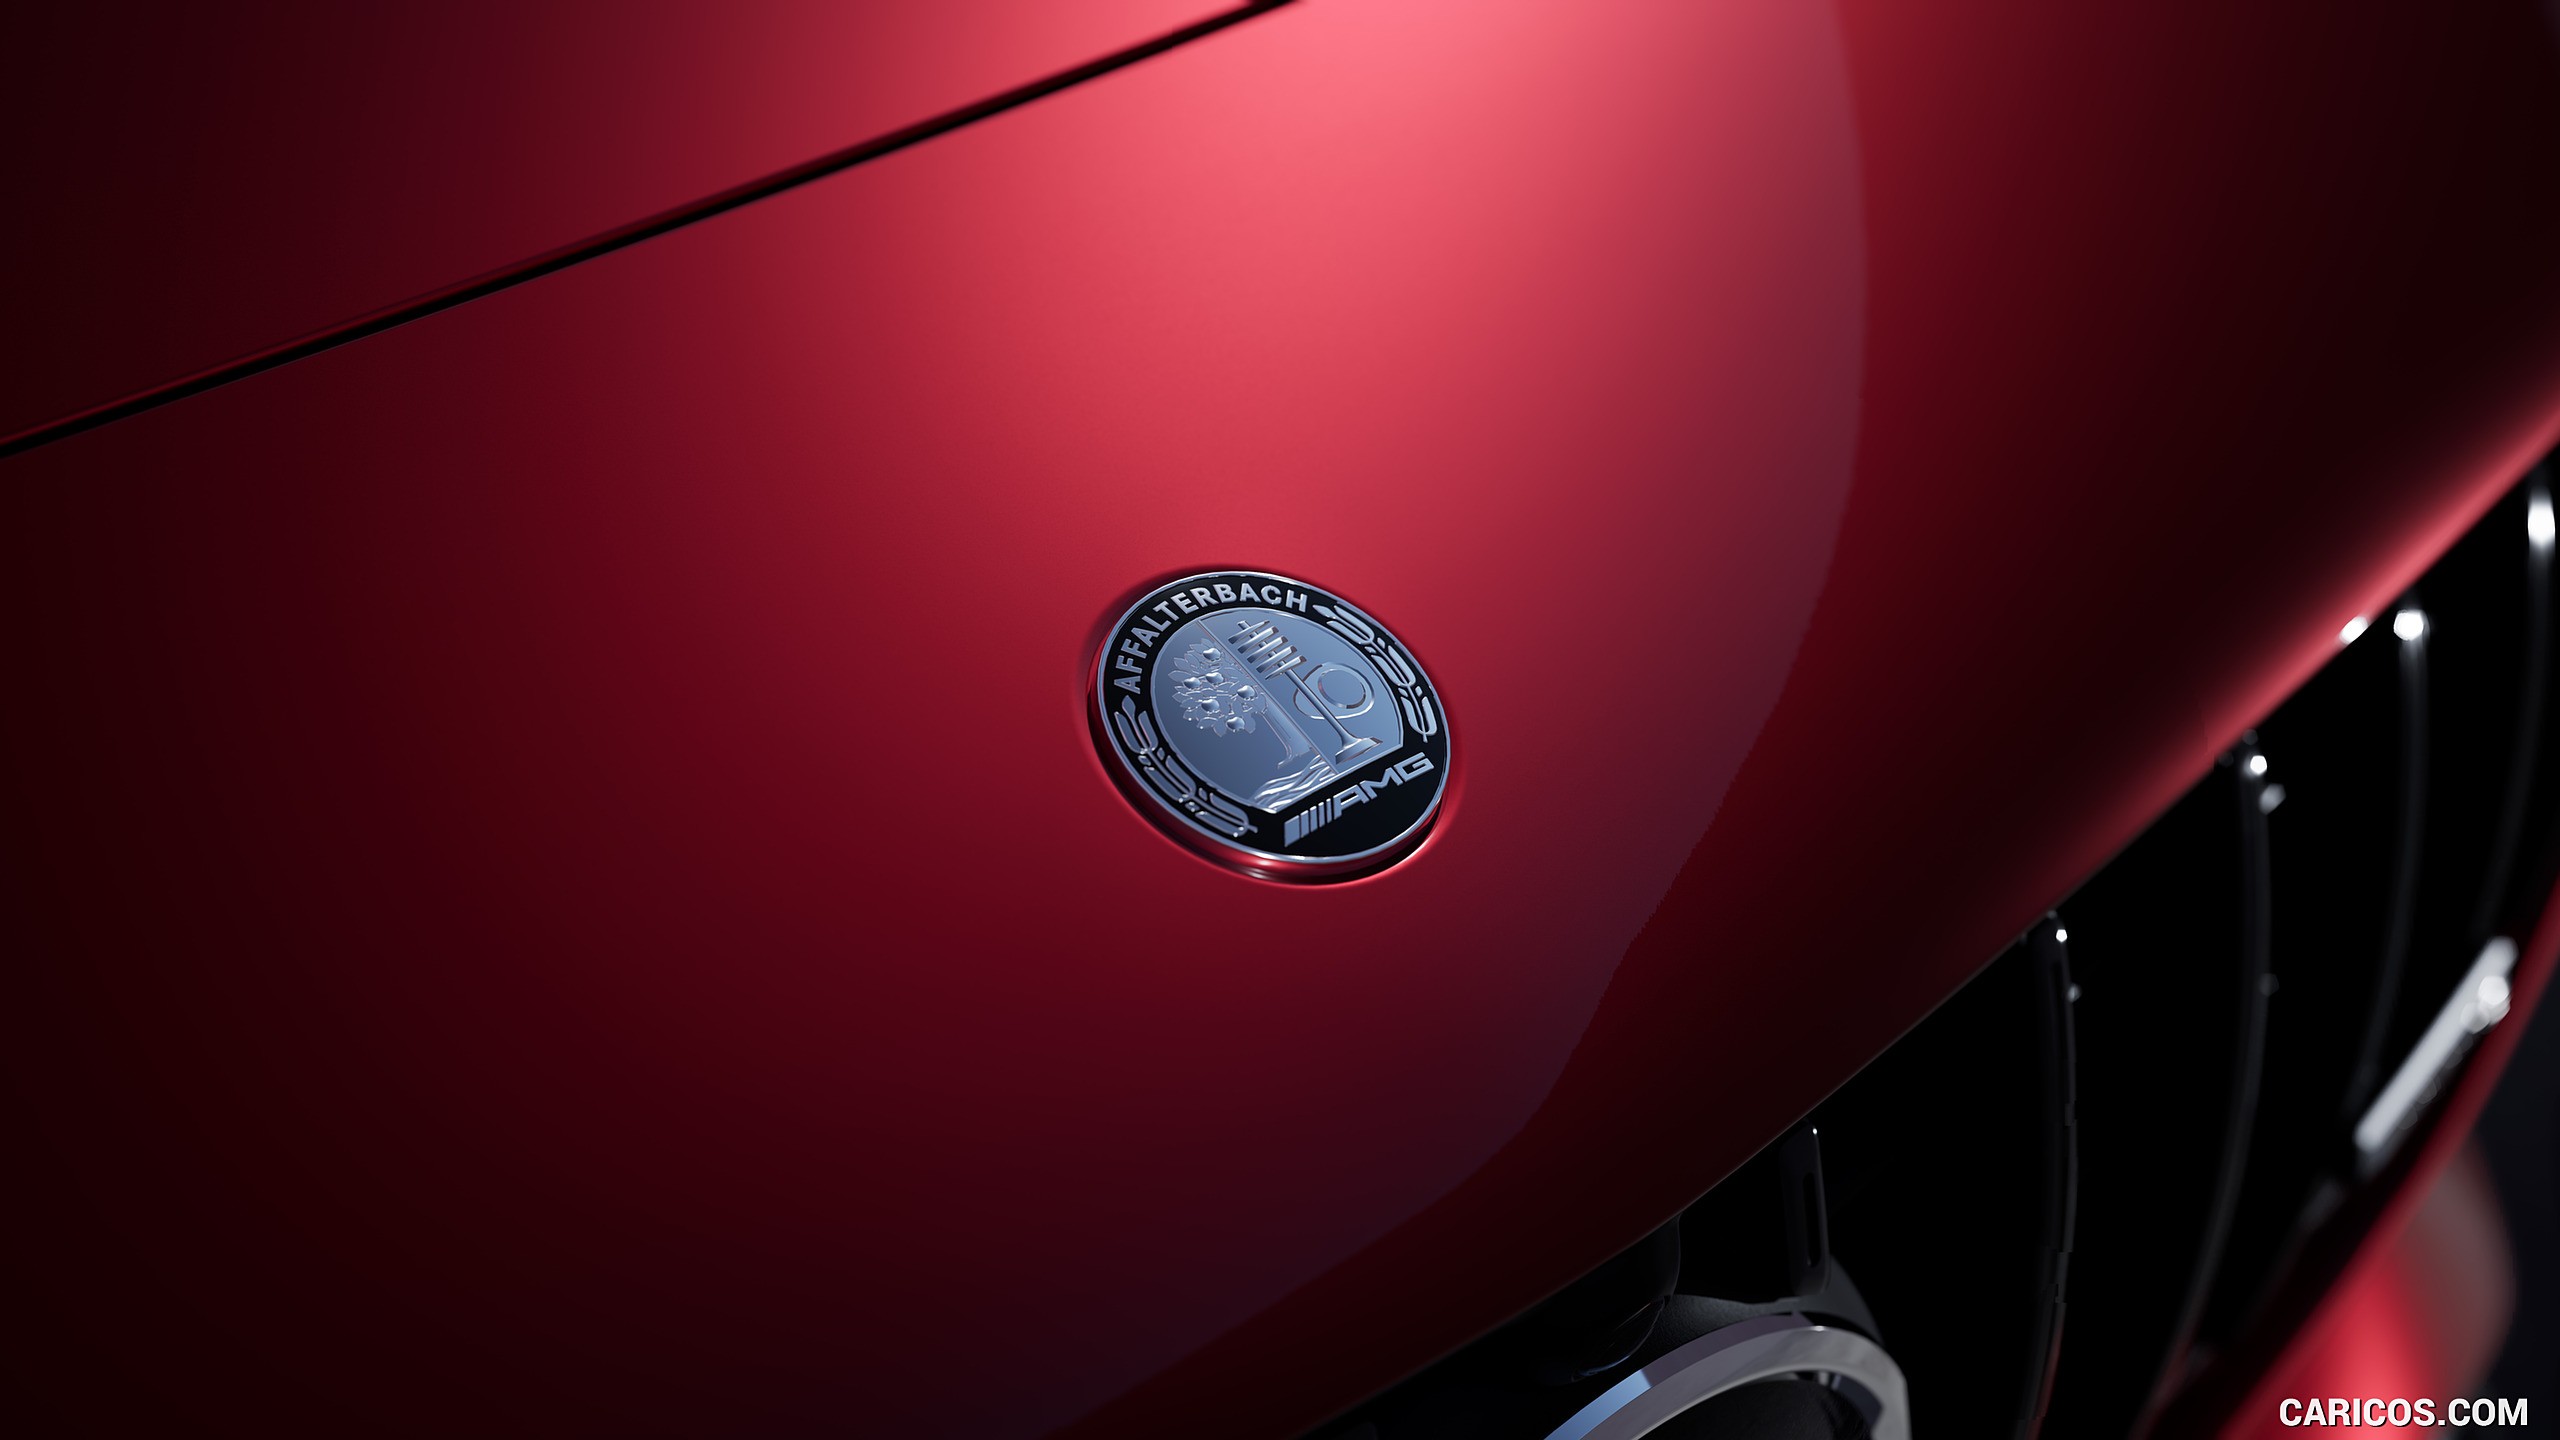 2023 Mercedes-AMG A 35 4MATIC Sedan - Badge, #12 of 12